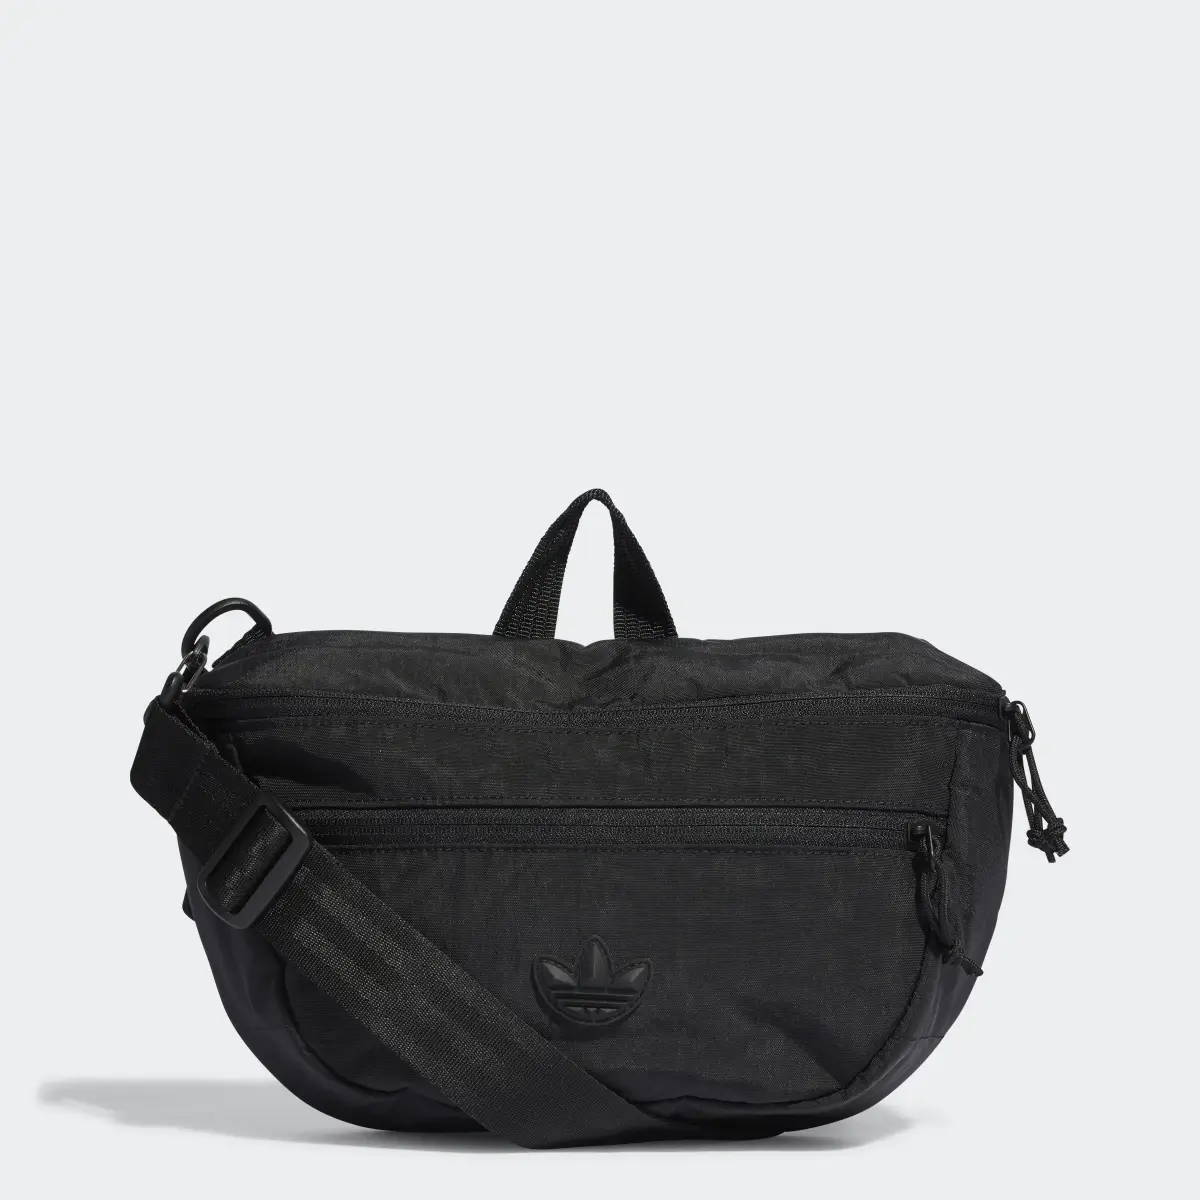 Adidas Adventure Waist Bag. 1